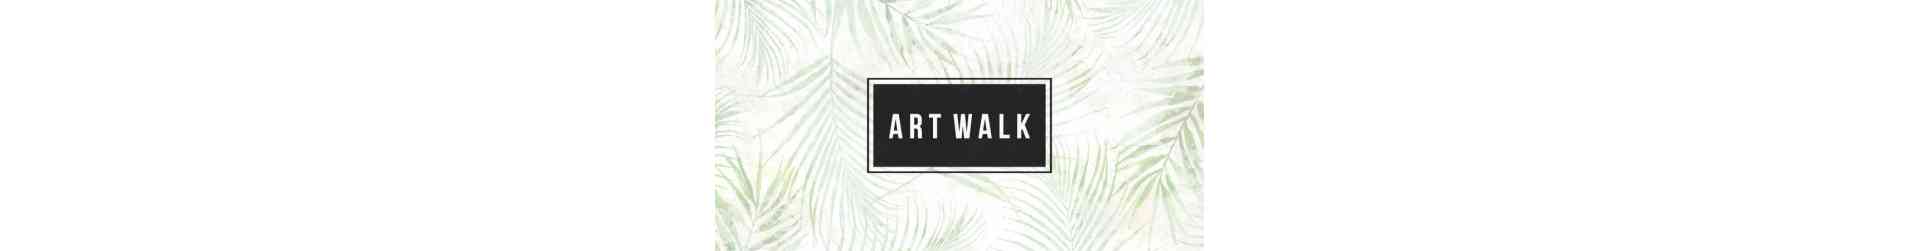 ART WALK - Heidi Swapp